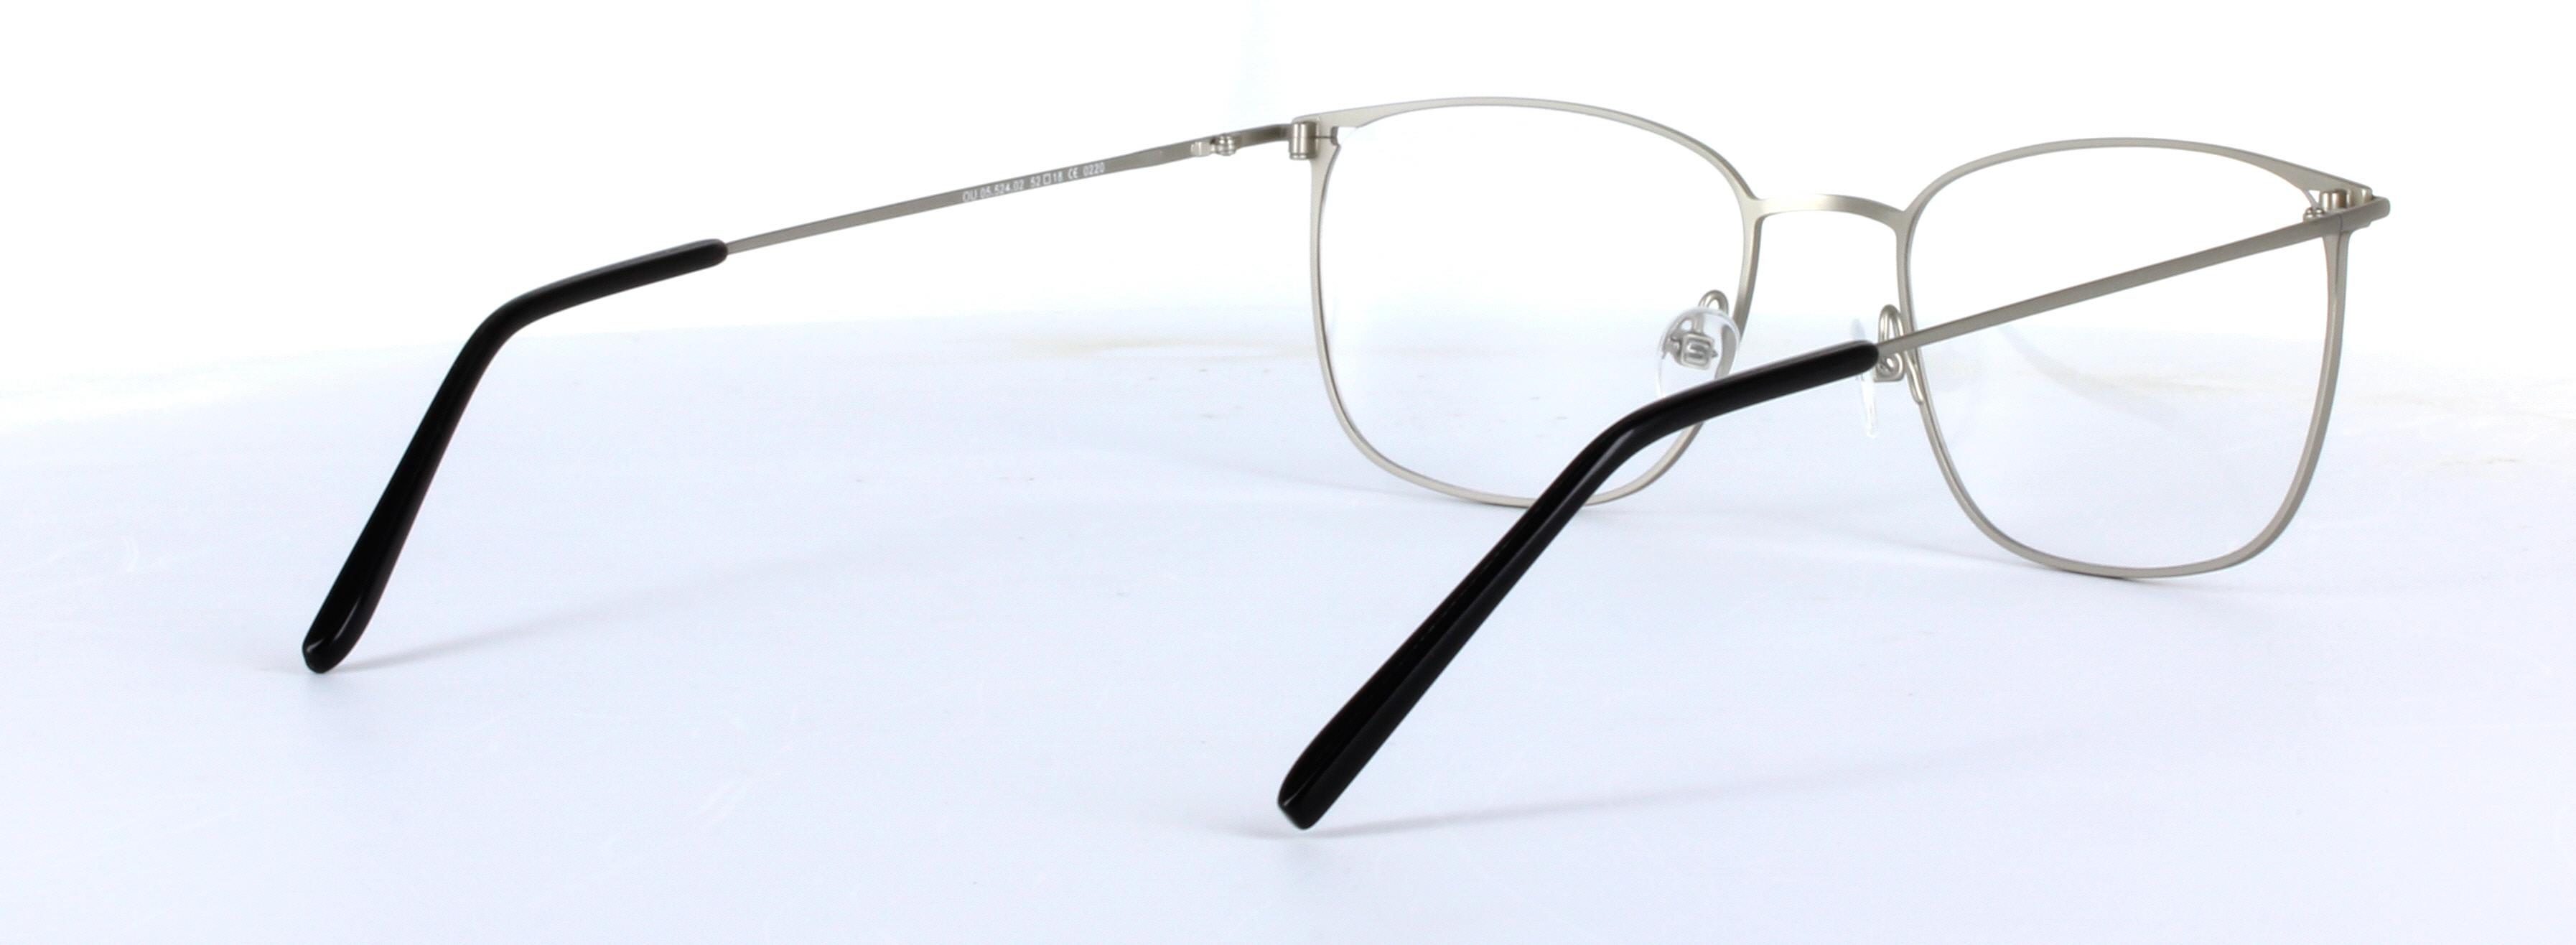 Hayden Olive Full Rim Rectangular Metal Glasses - Image View 4